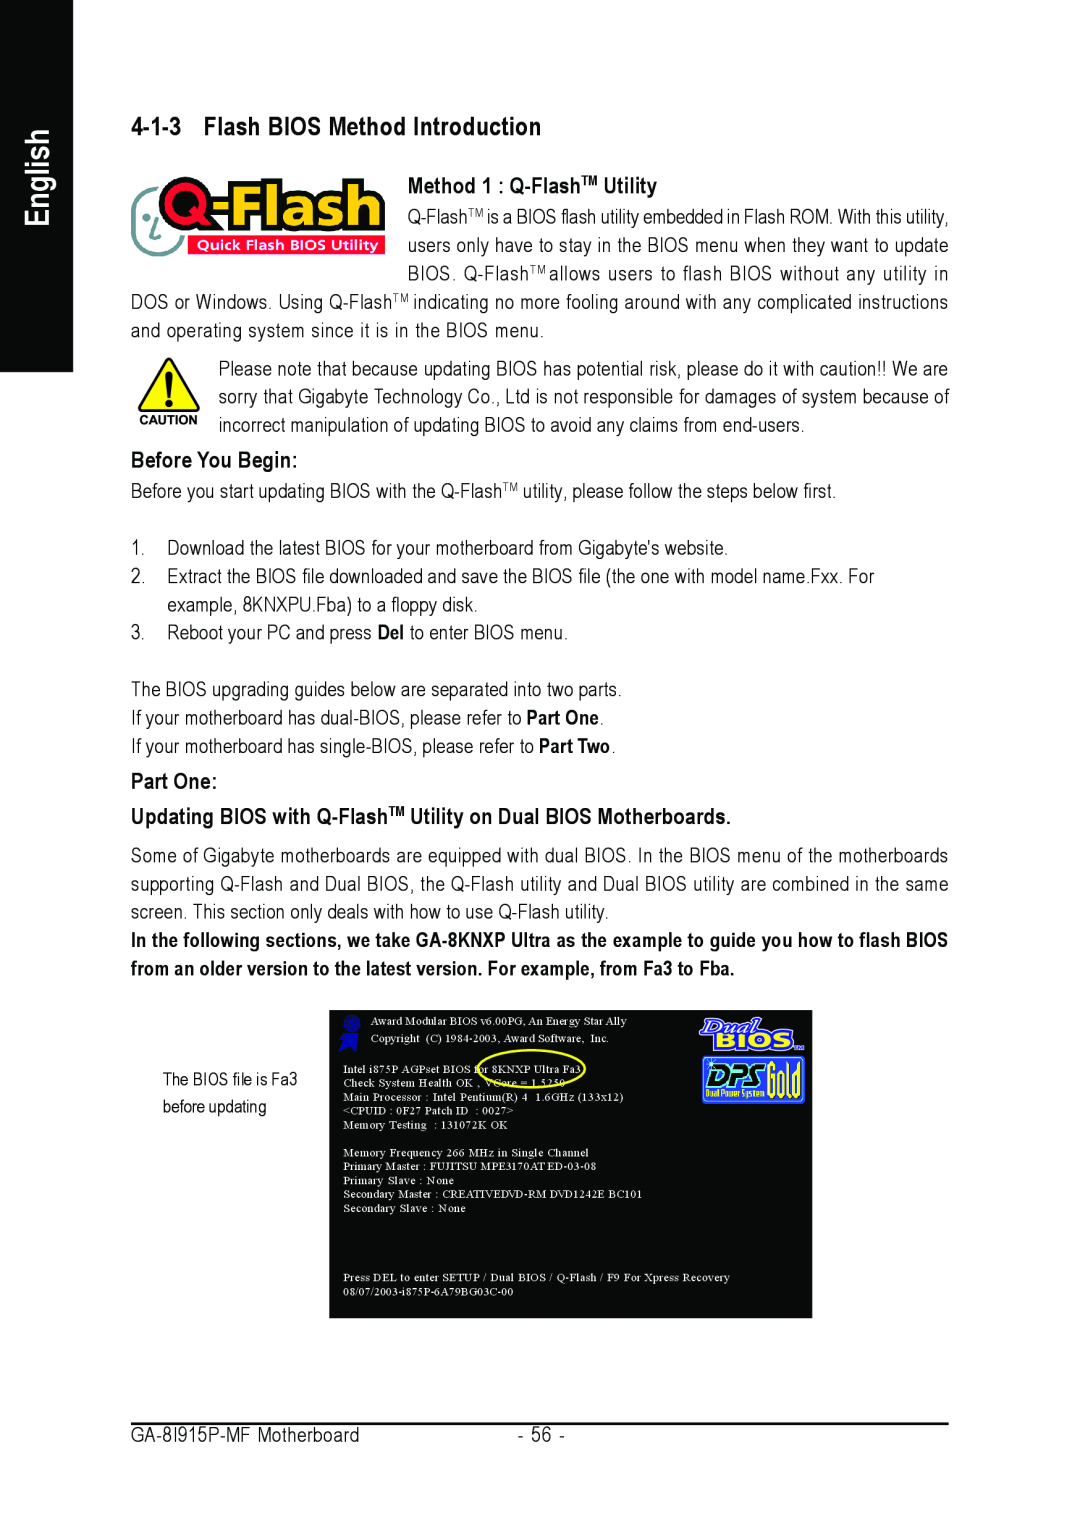 Gigabyte GA-8I915P-MF Flash BIOS Method Introduction, Method 1 Q-FlashTM Utility, Before You Begin, Part One, English 